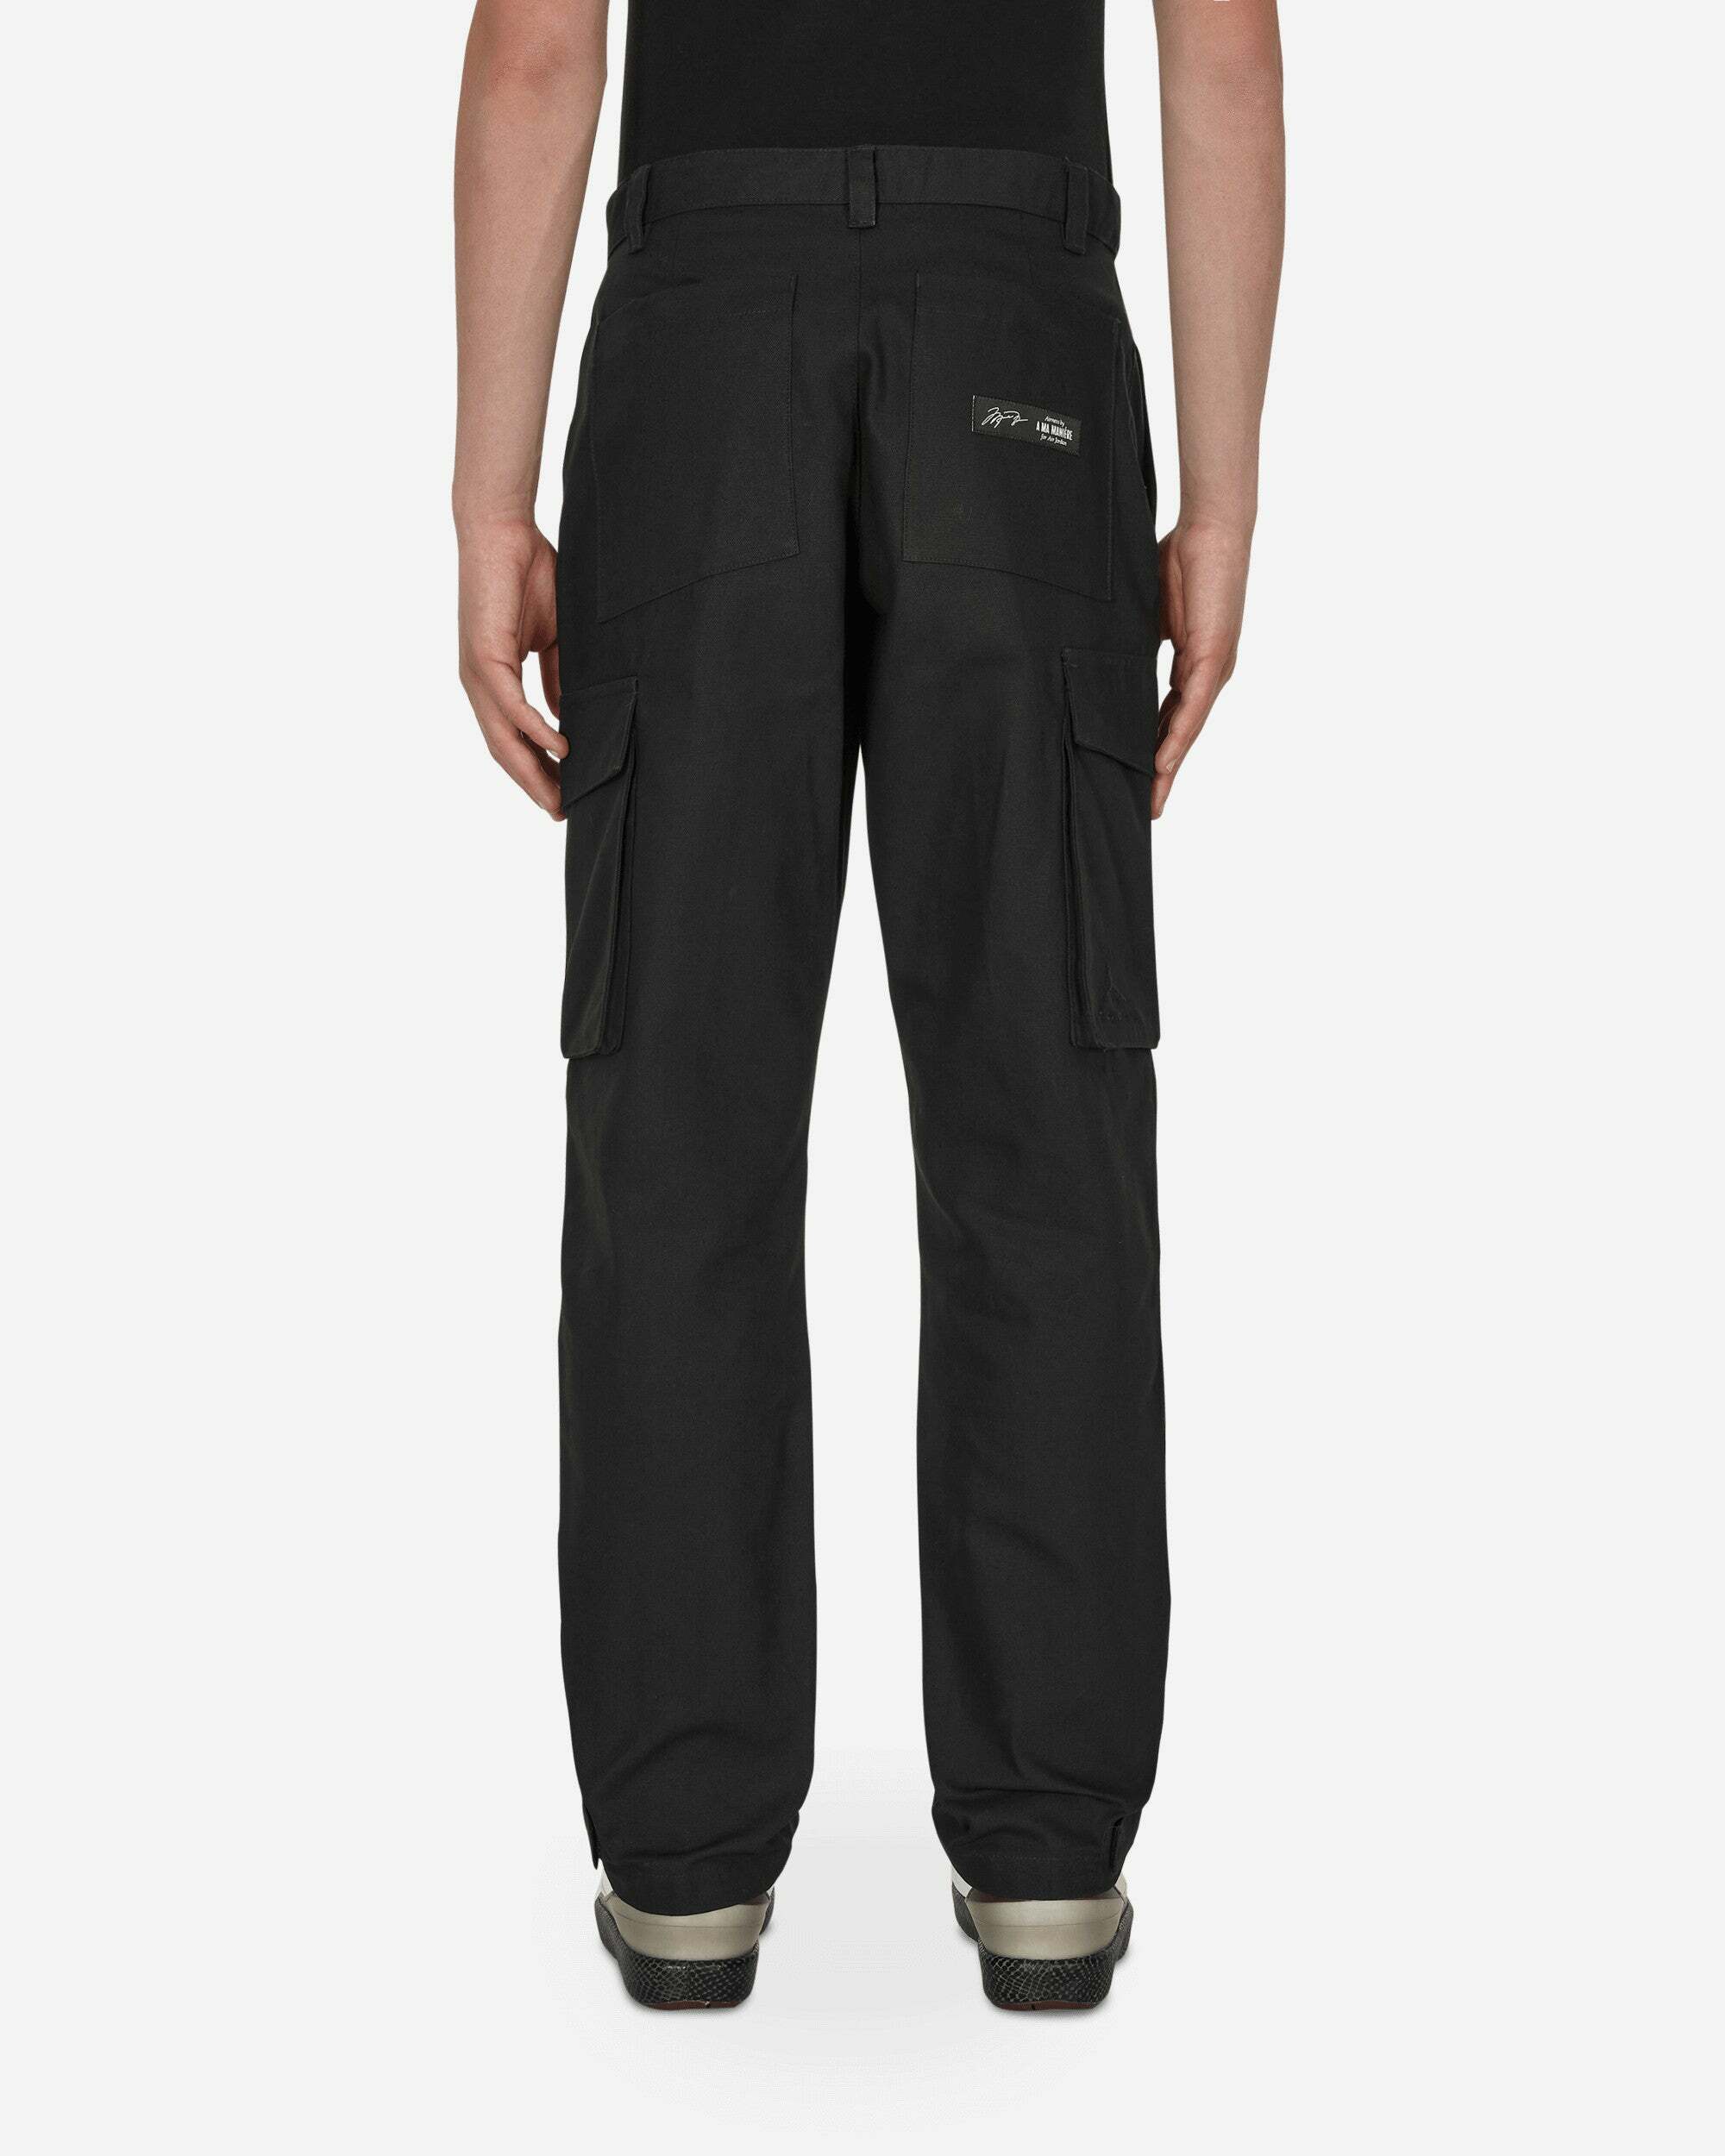 A Ma Maniére Cargo Pants Nike Jordan Brand